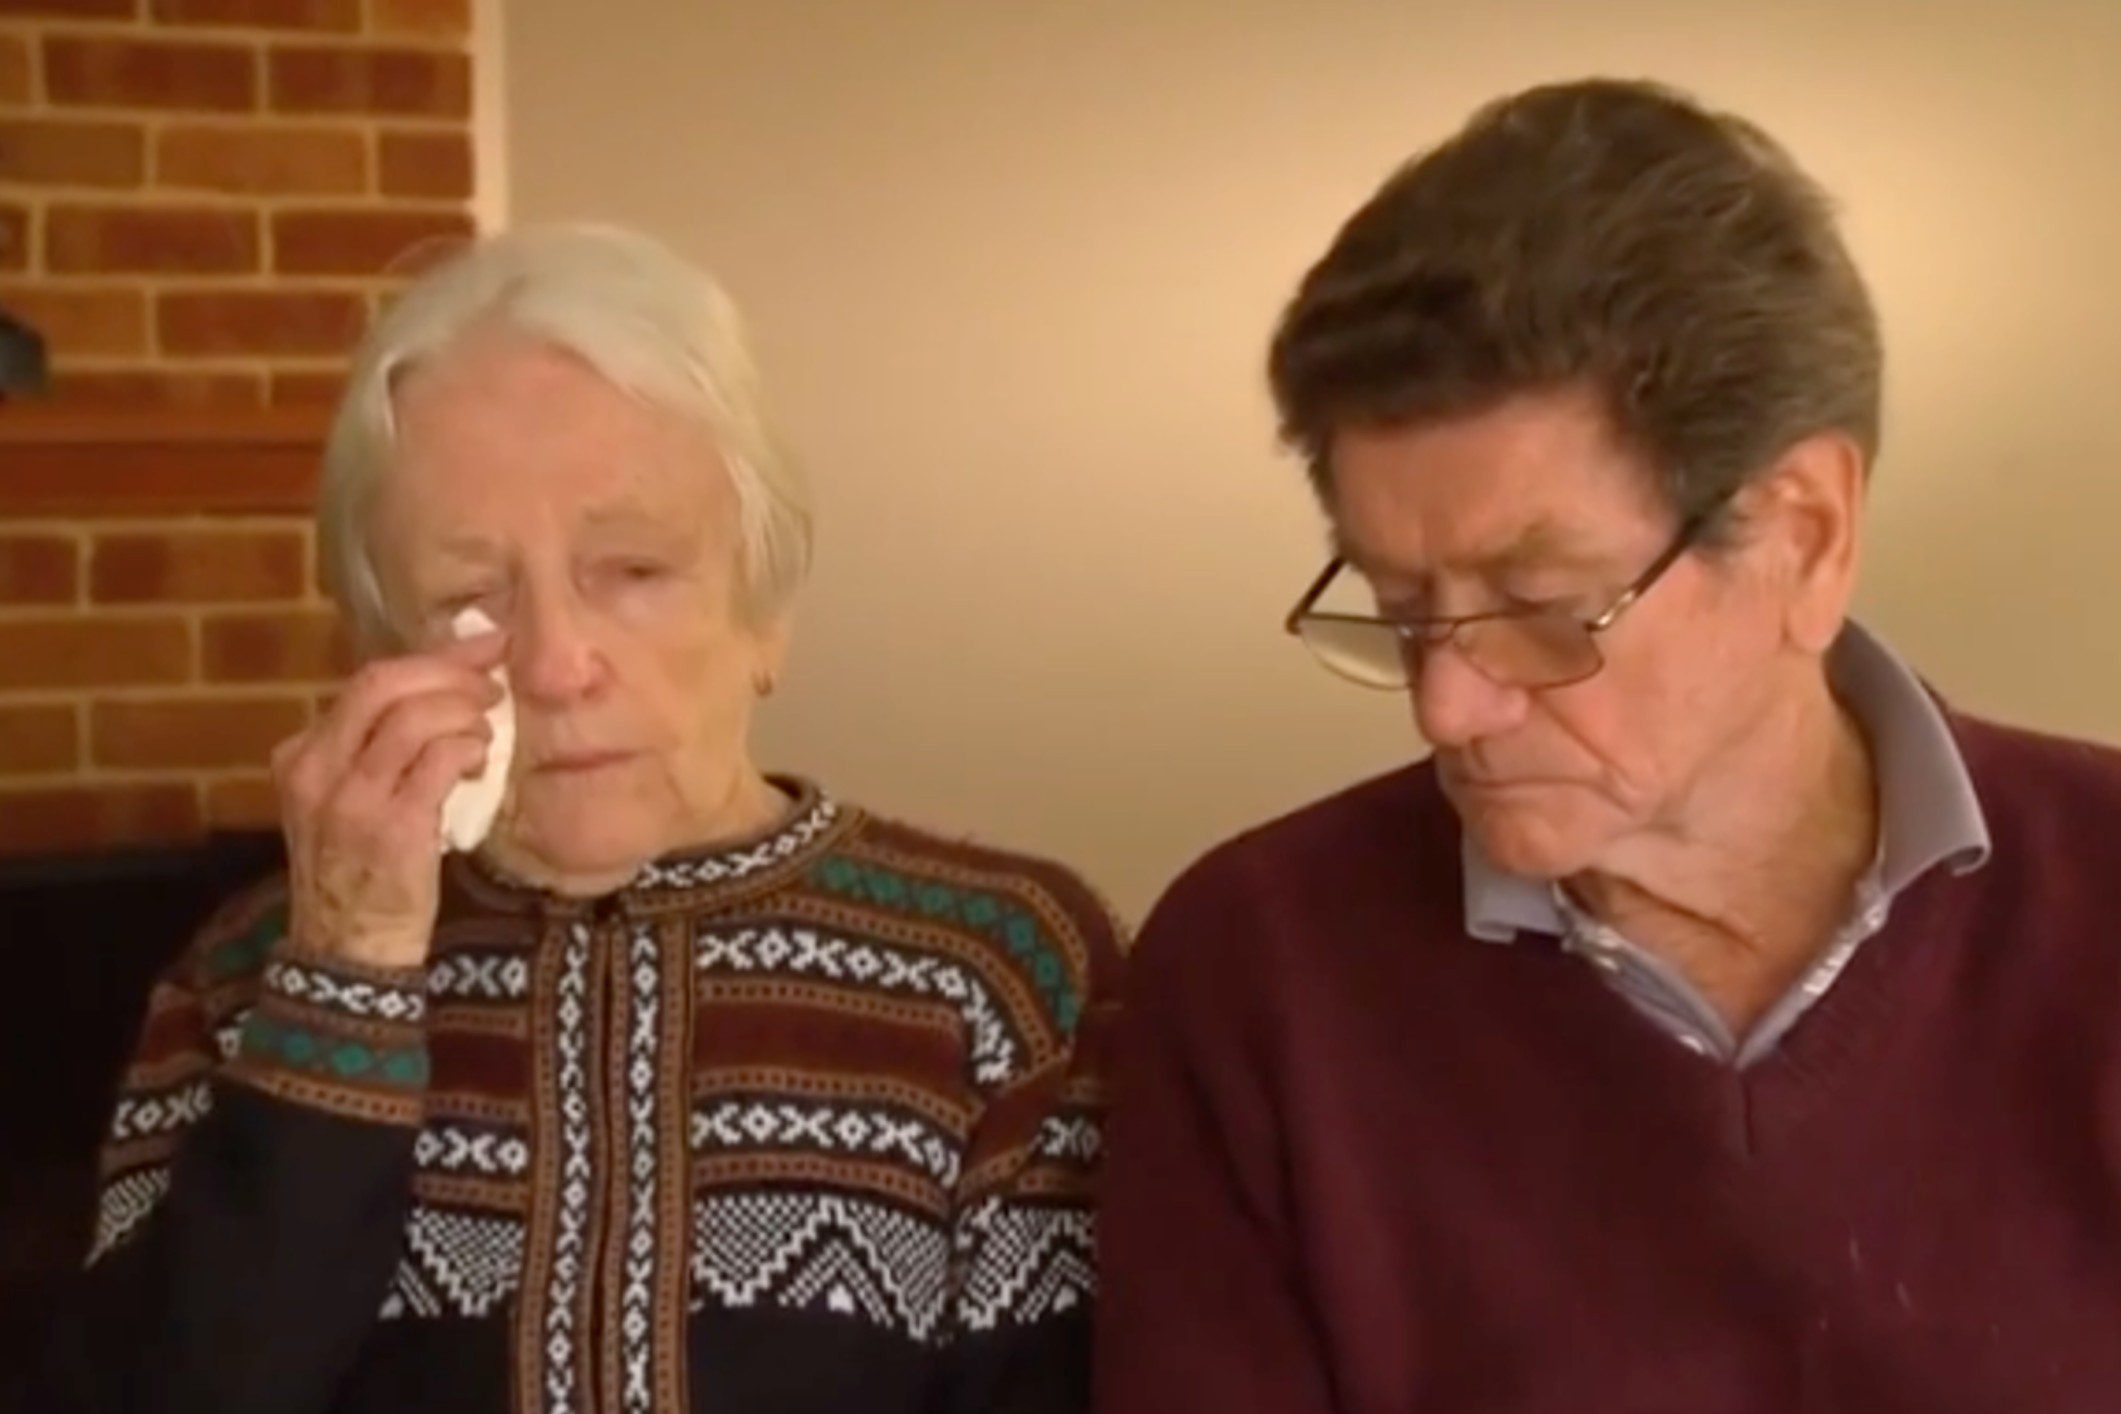 Elderly couple's 'tree-change' turns into moving nightmare